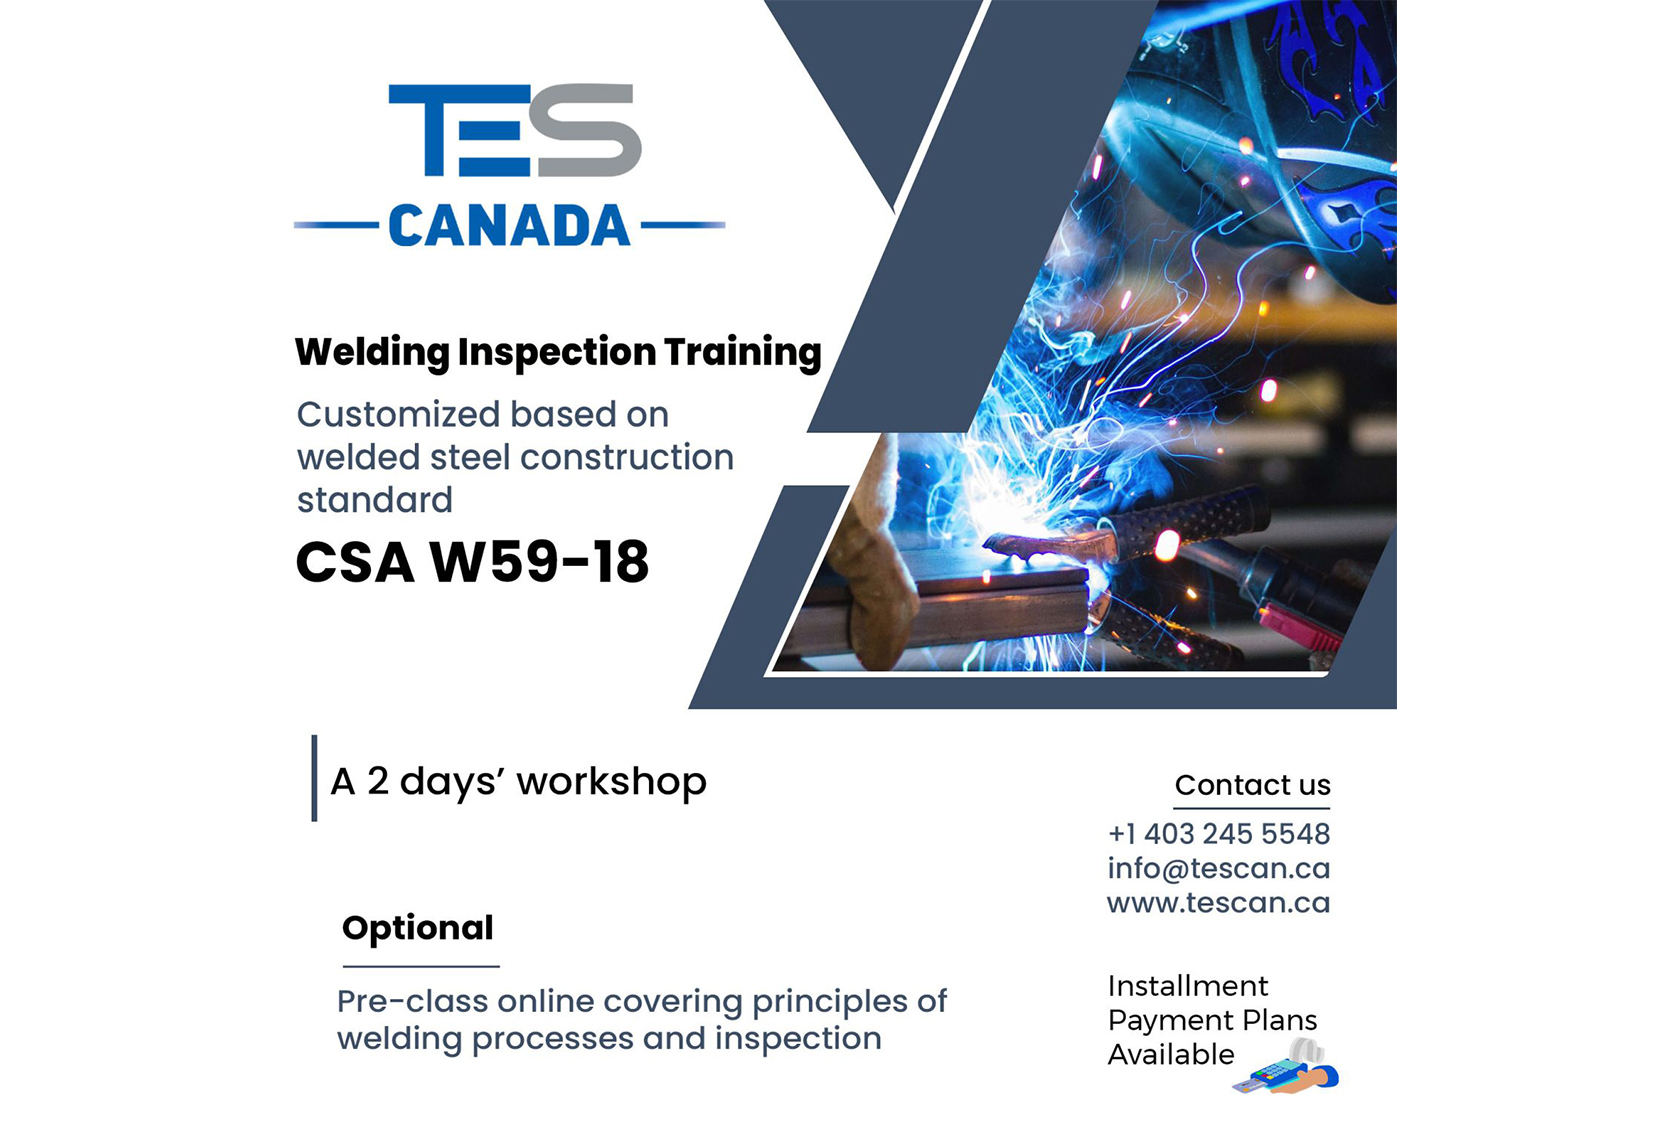 Welding inspection training customized 